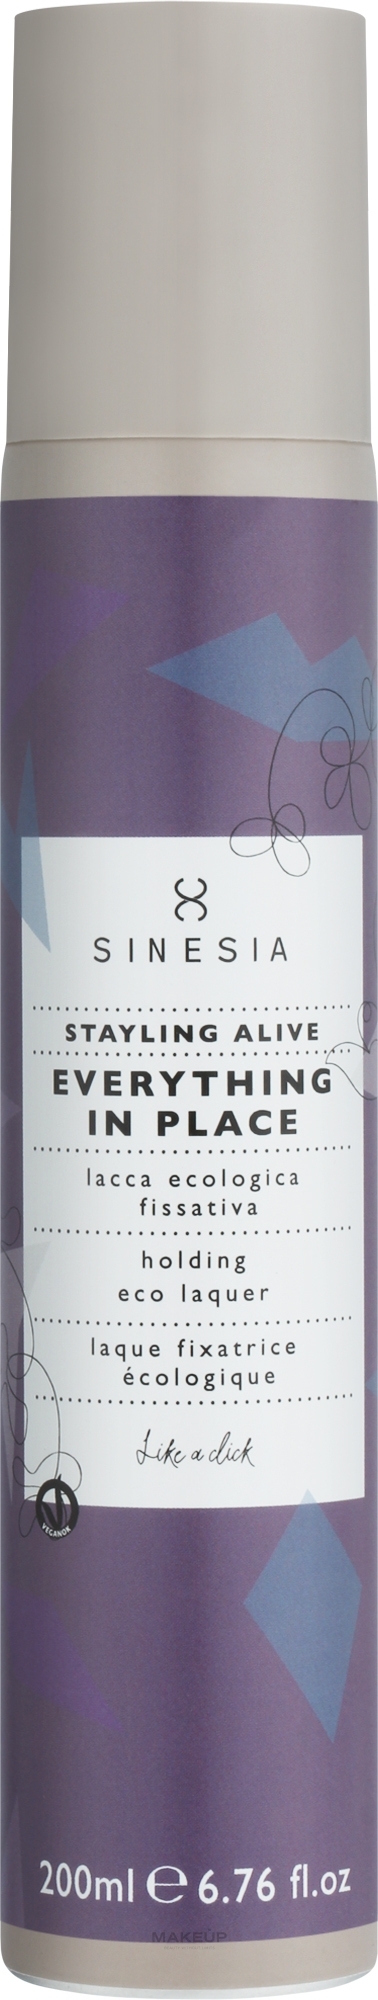 Эколак средней фиксации для волос - Sinesia Stayling Alive Everything In Place — фото 200ml